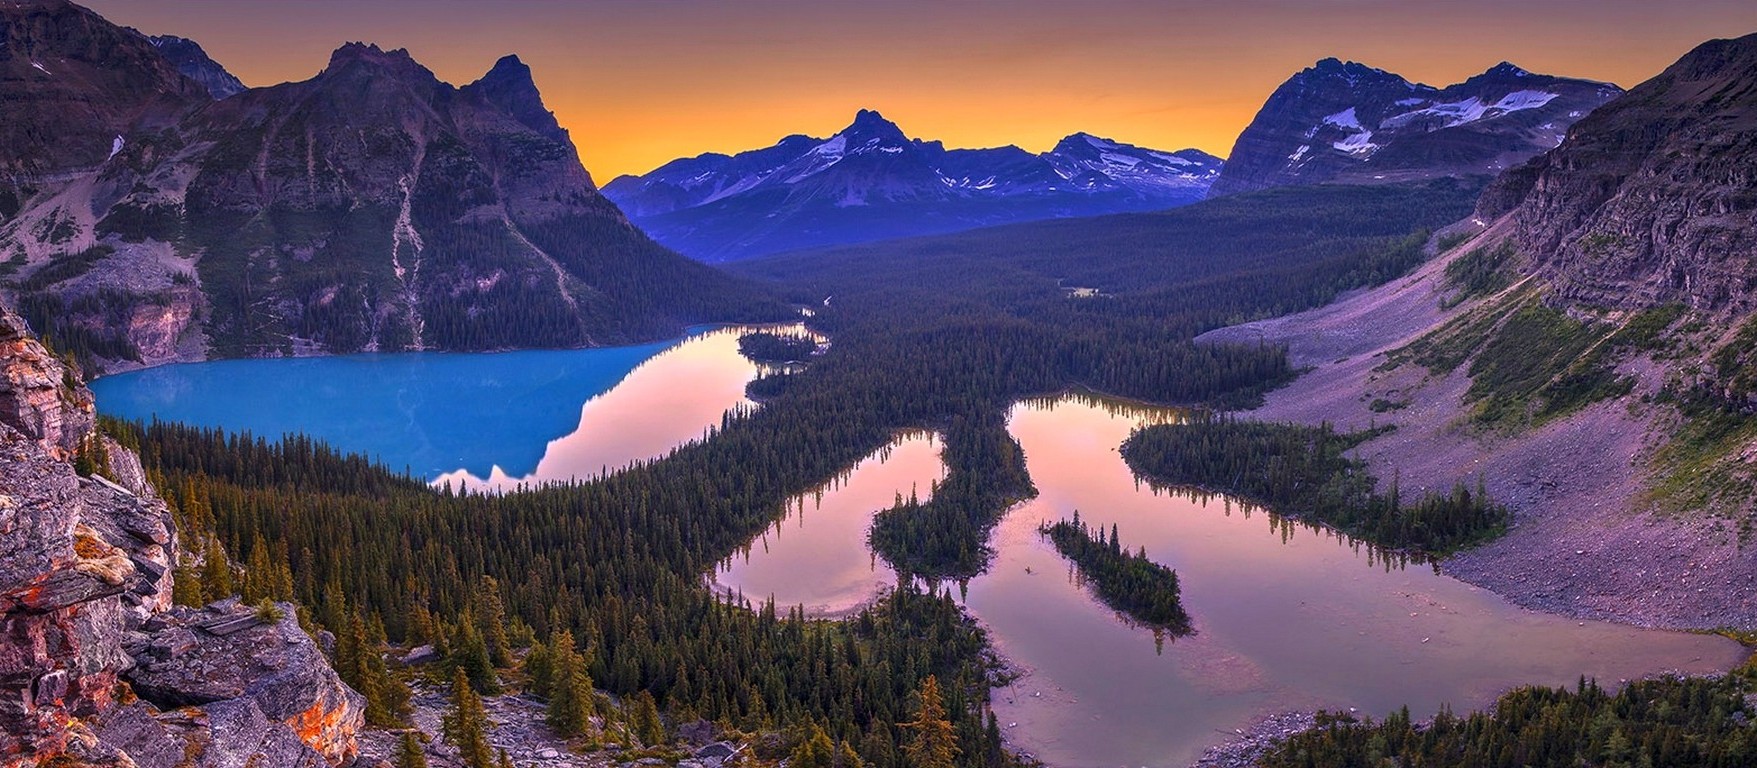 Yoho National Park, British Columbia, Canada, Mountain, Valley, Lake